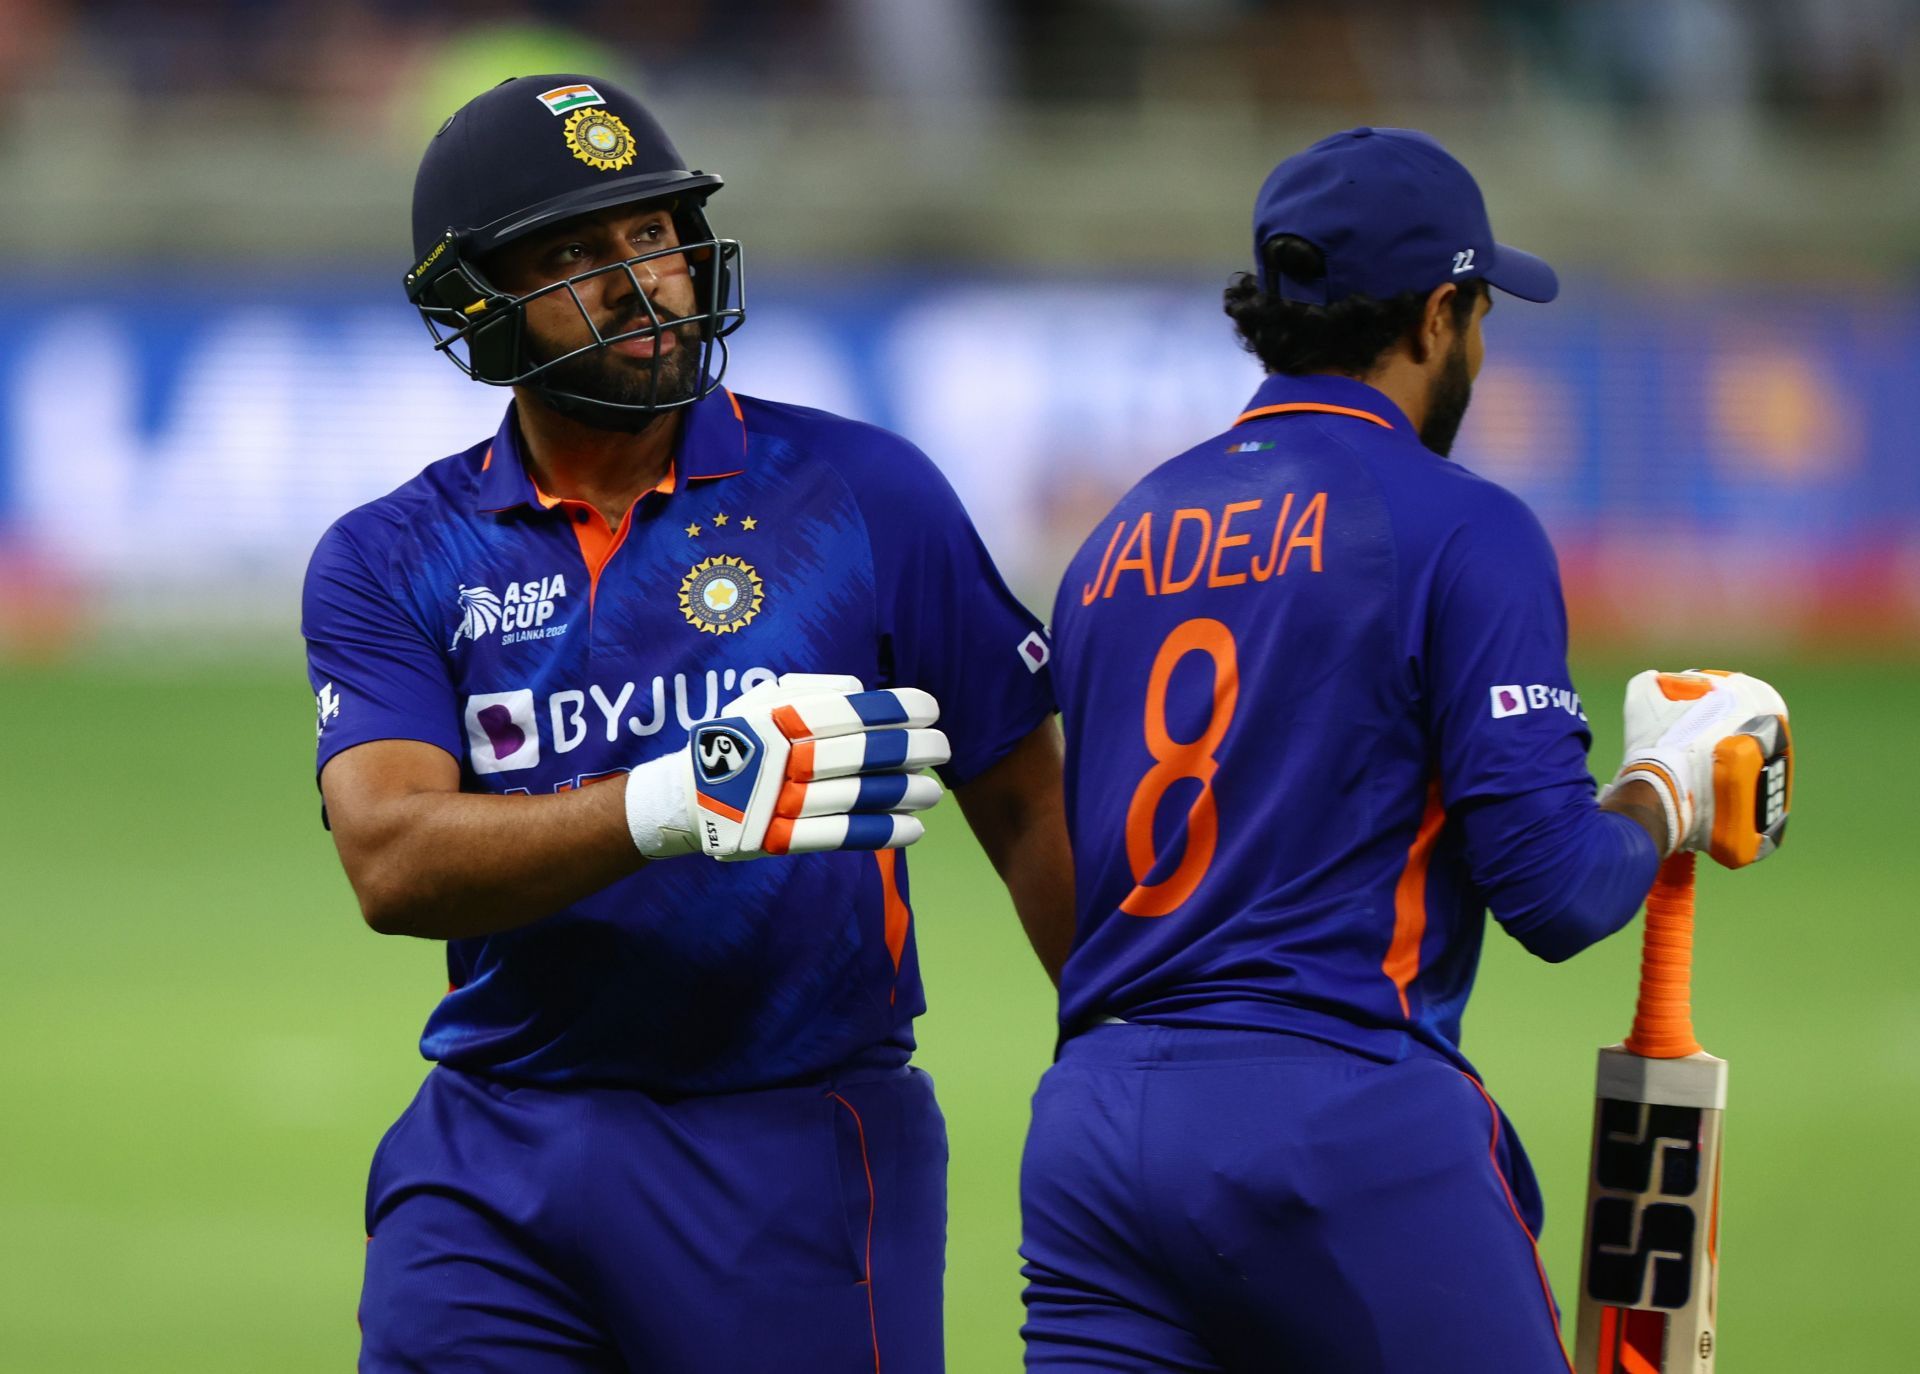 Rohit Sharma wants India to keep playing attacking cricket. (Image Credits: Getty)